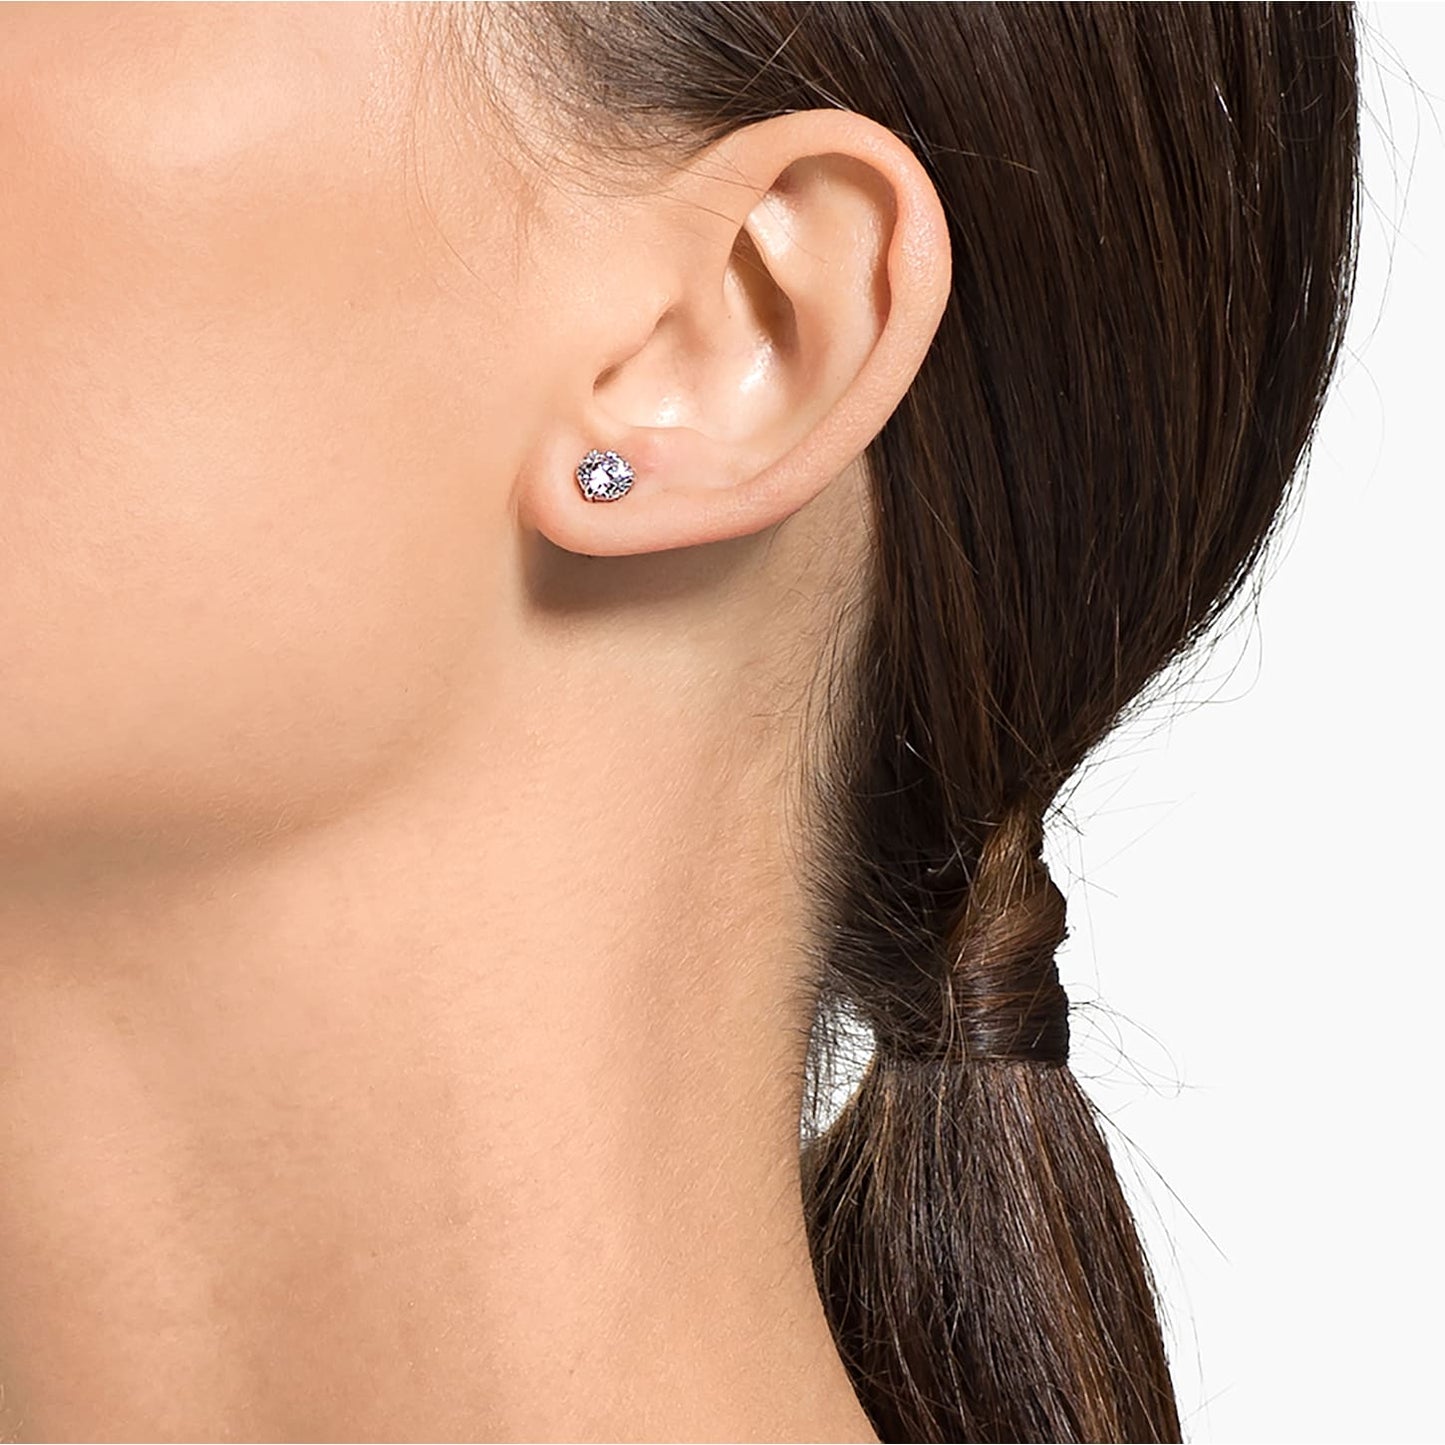 Attract - White Silver - Round - Stud Earrings - Swarovski